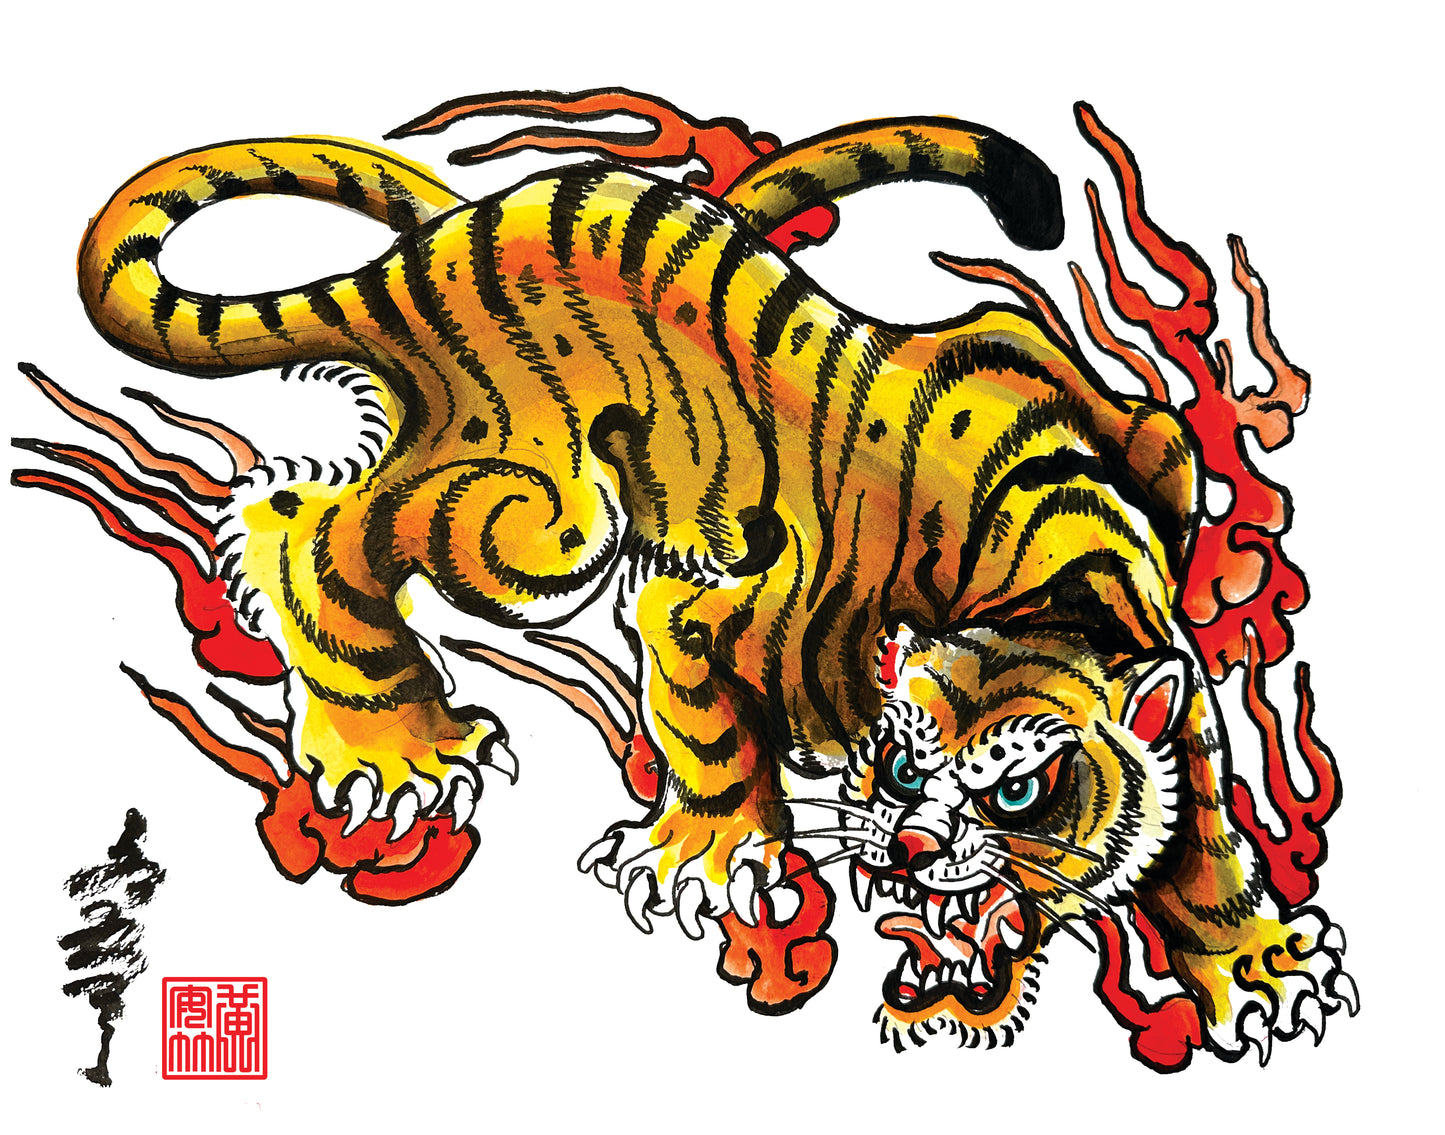 "Crouching Tiger" - Flash Print